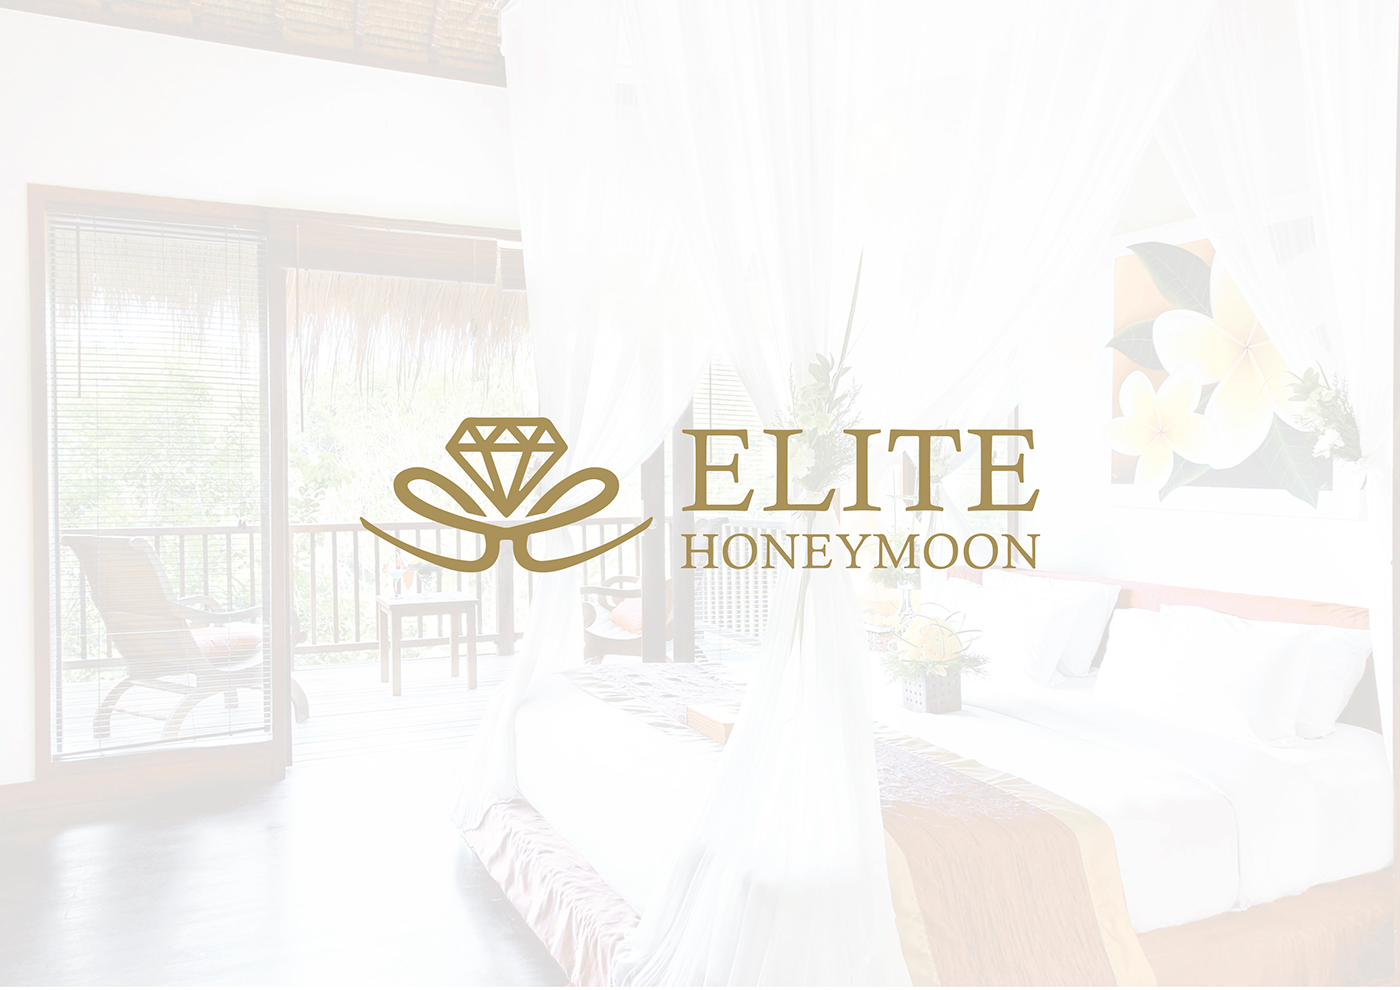 elite honeymoon elite logo elite honeymoon logo honeymoon logo